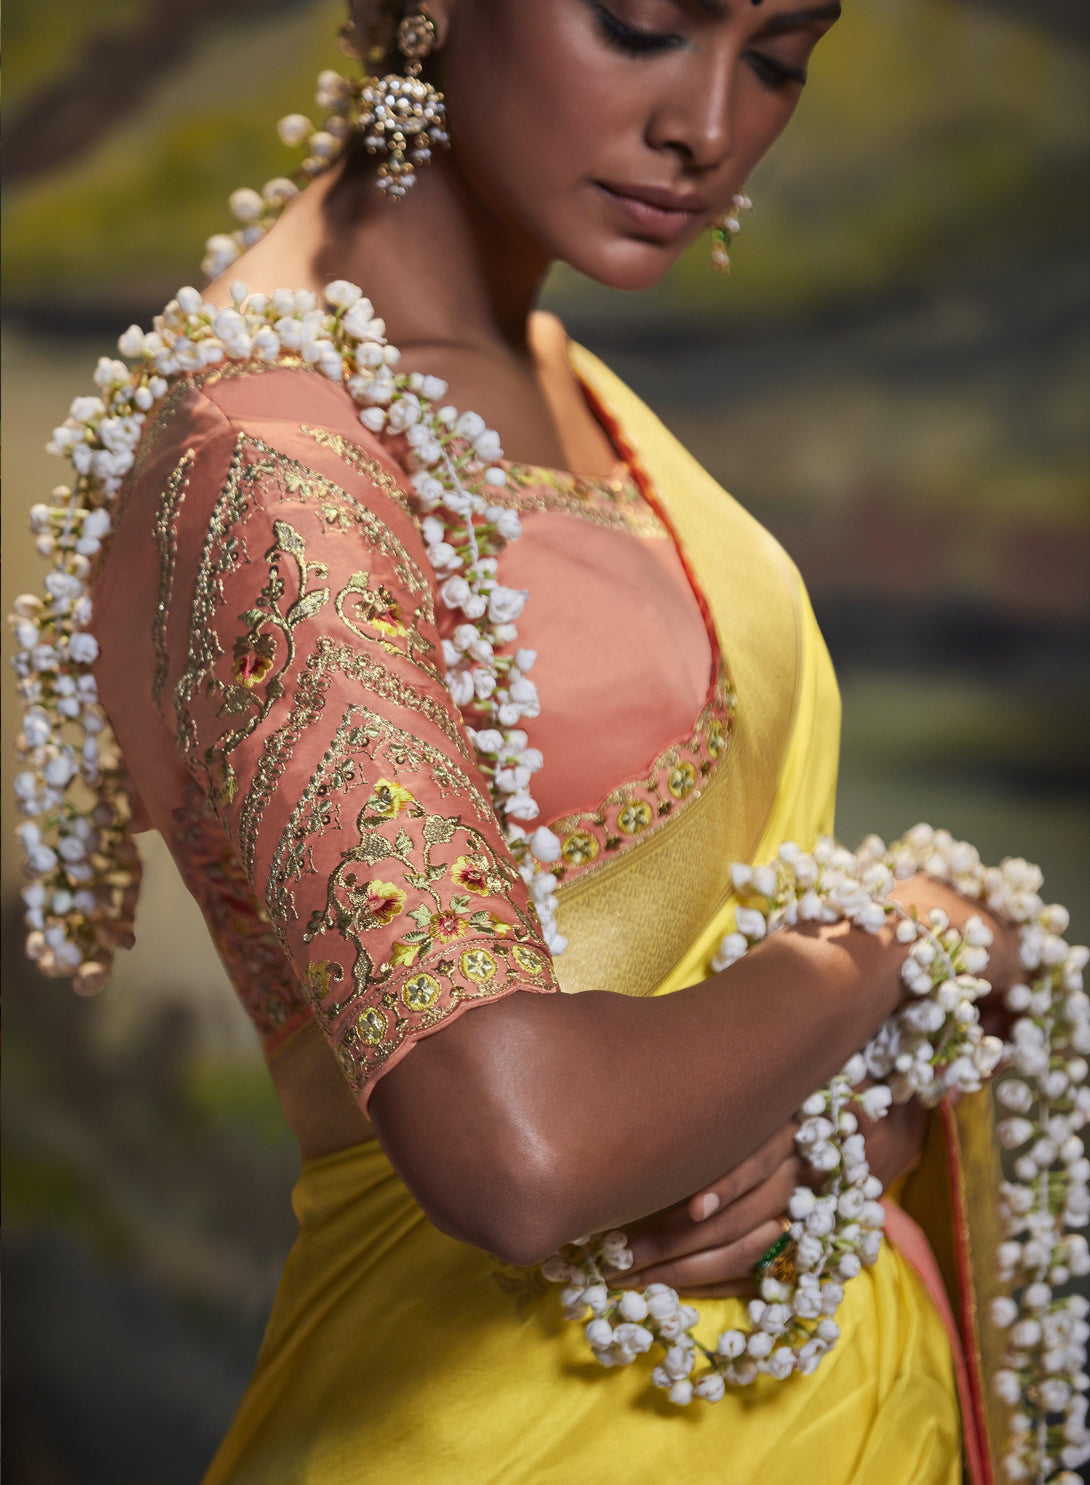 Yellow Ravishing Weaving Reception Contemporary Saree - Indiakreations